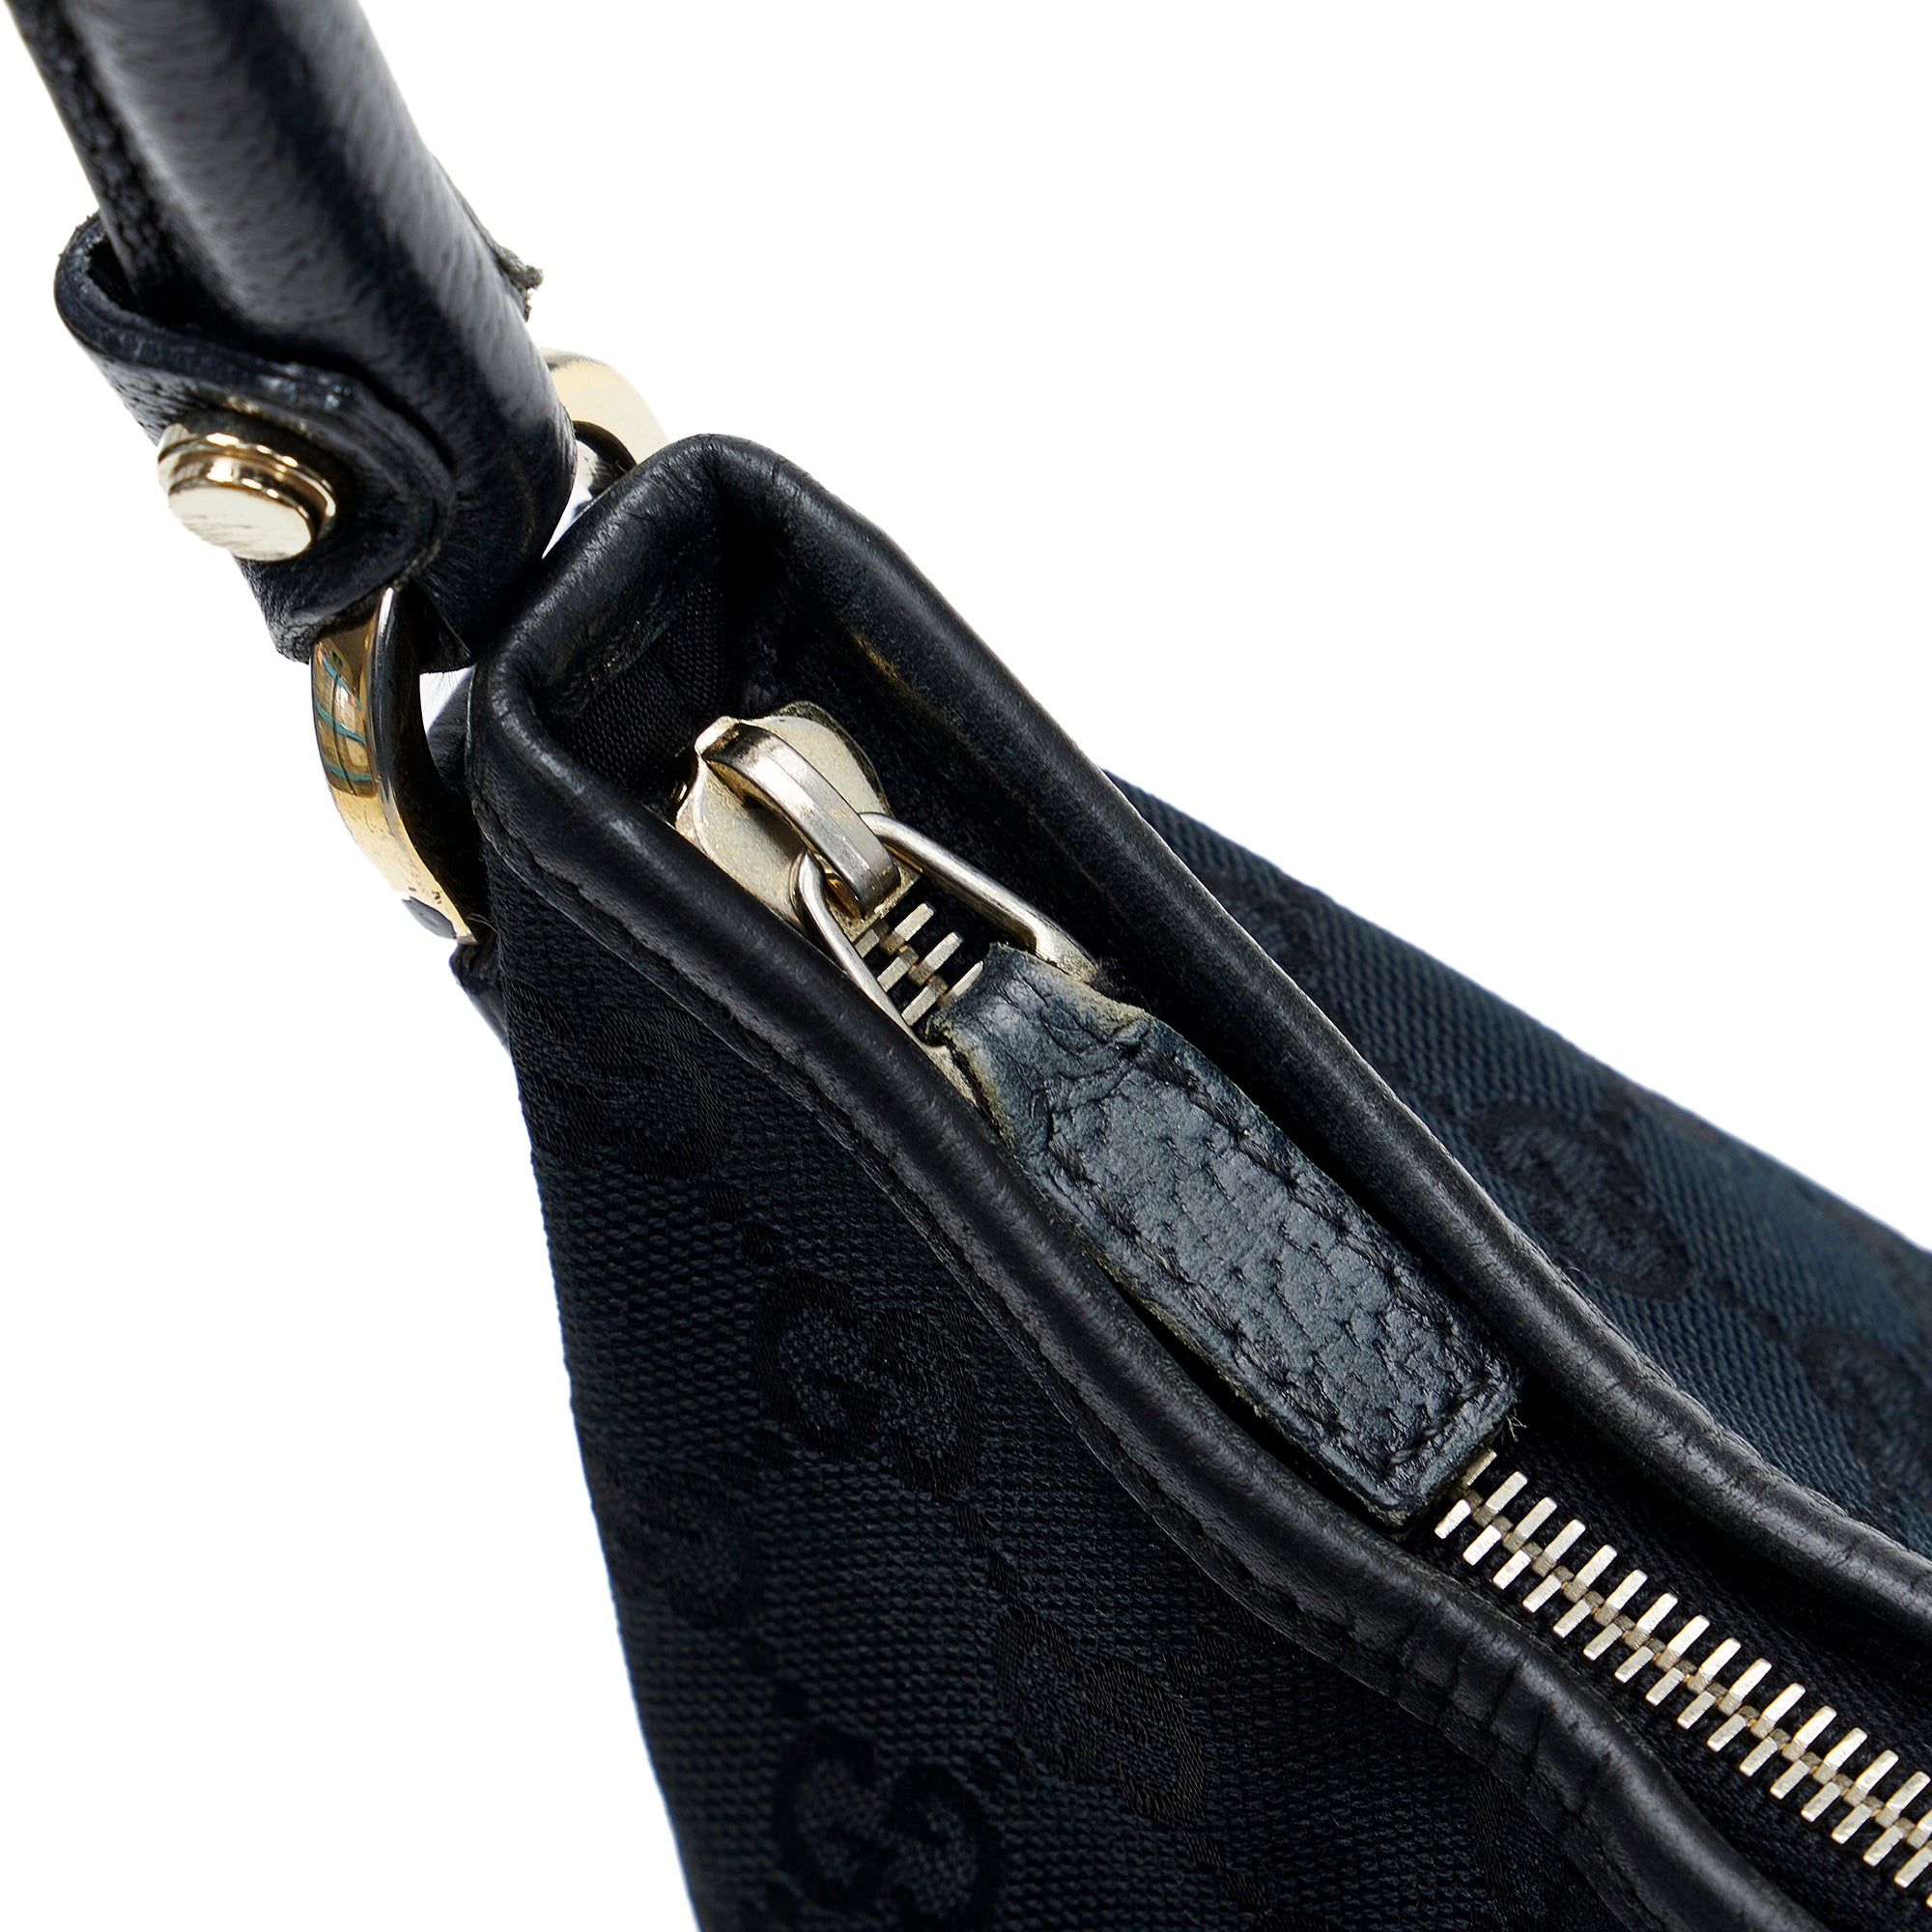 Gucci GG Black Monogram Leather Pochette Crossbody Bag